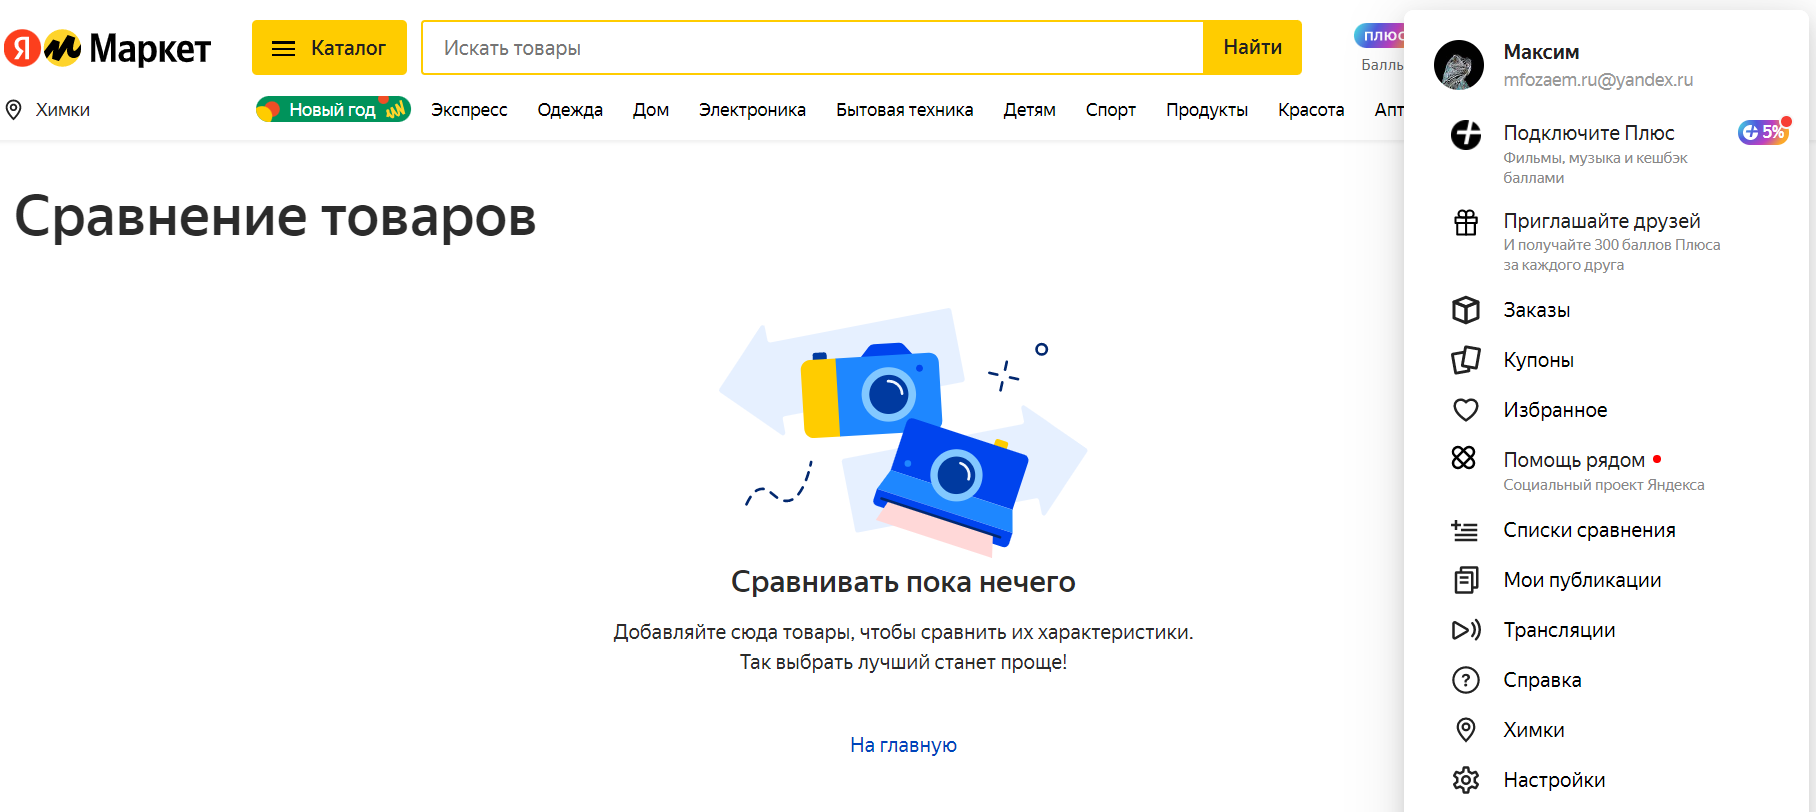 Яндекс.Маркет скриншот личного кабинета